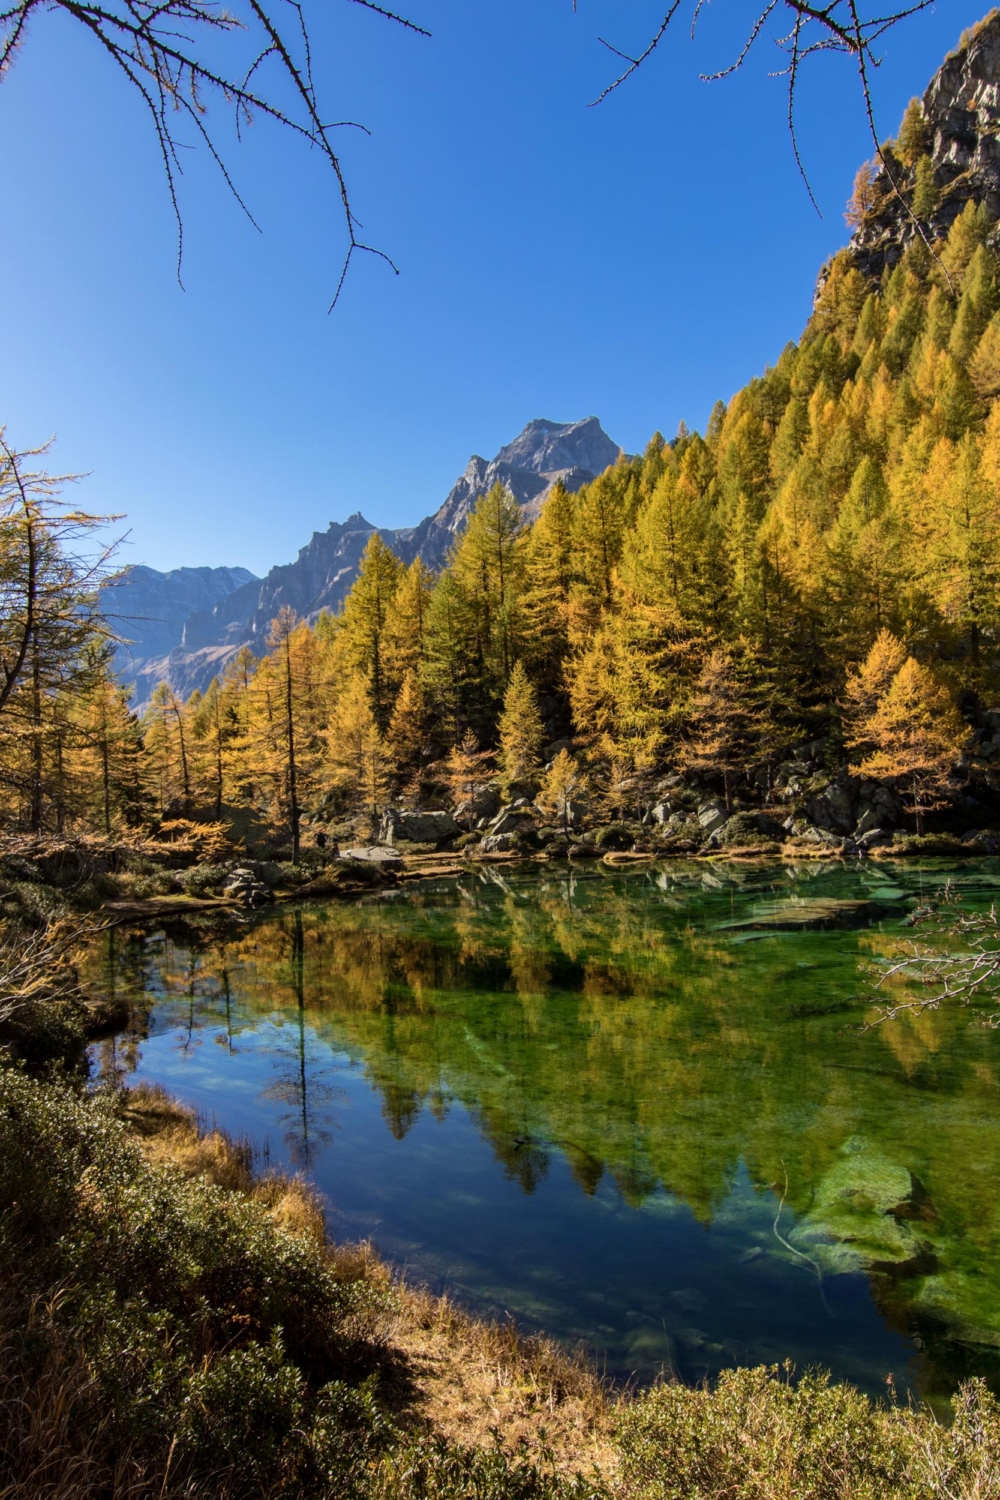 Spytte ud Kræft vækst Hiking in the Ossola Valley - Around Alpe Devero and Crampiolo | VisitOssola